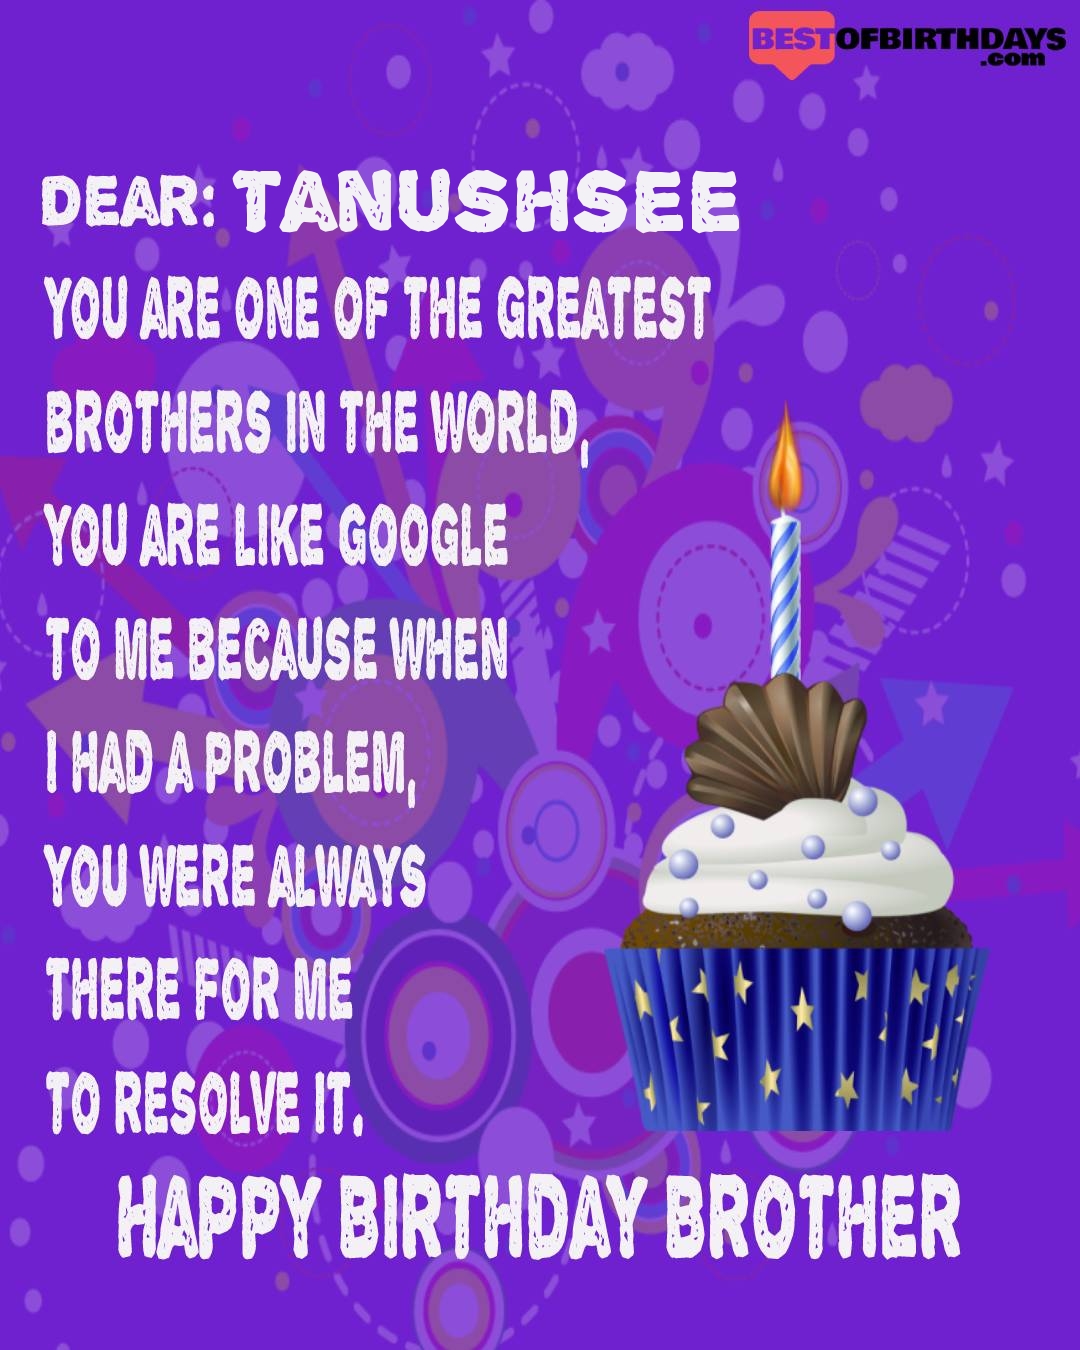 Happy birthday tanushsee bhai brother bro